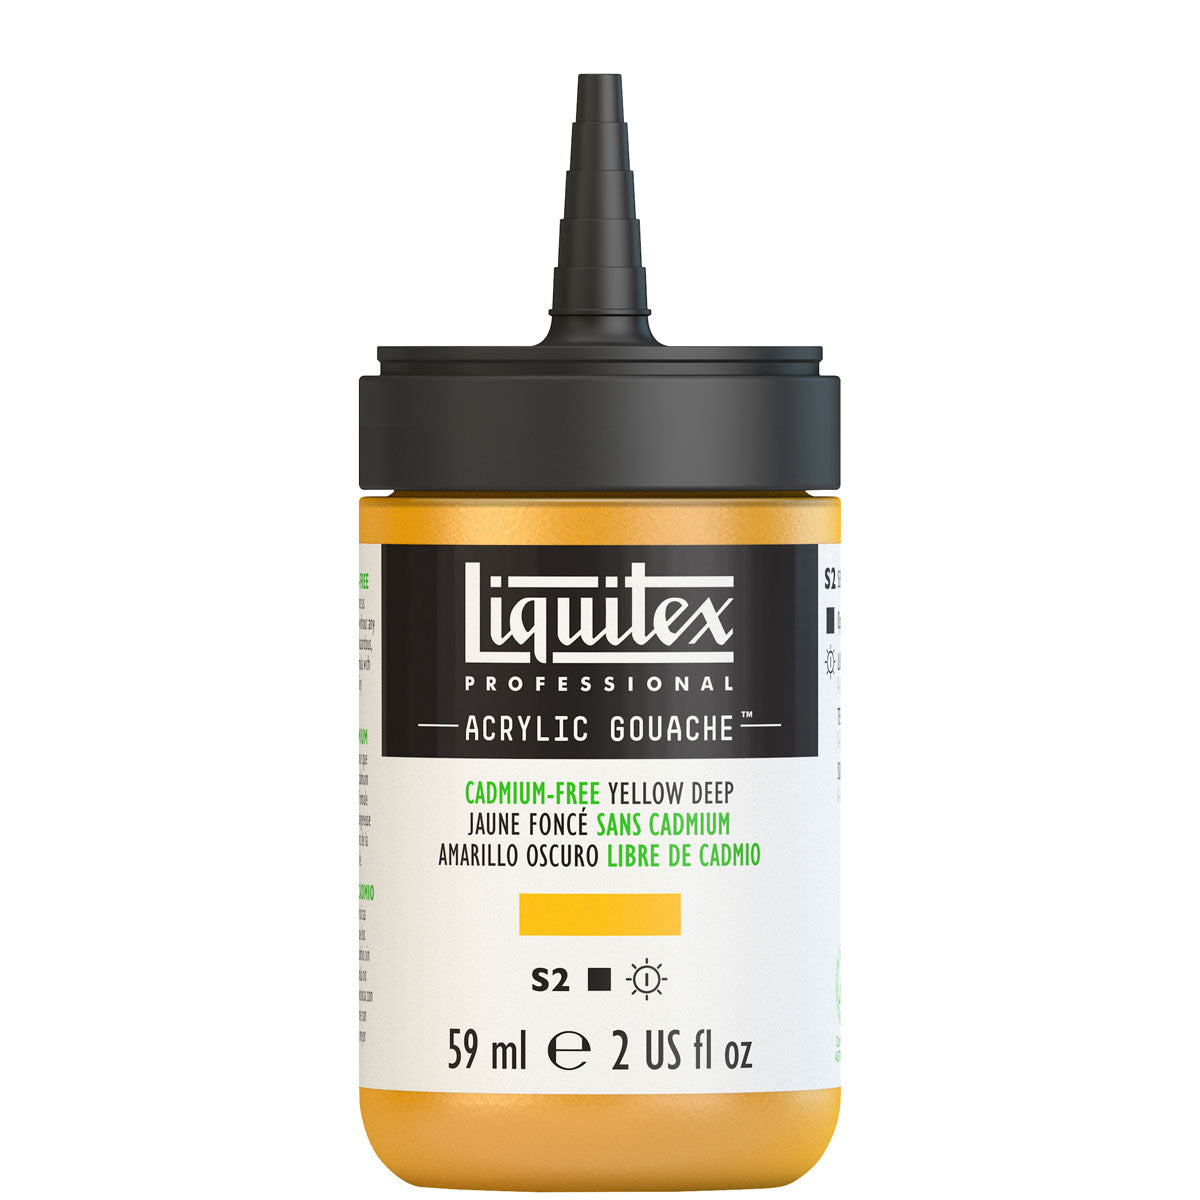 Liquitex - Acrylic Gouache 59ml S2 - Cadimum-Free Yellow Deep